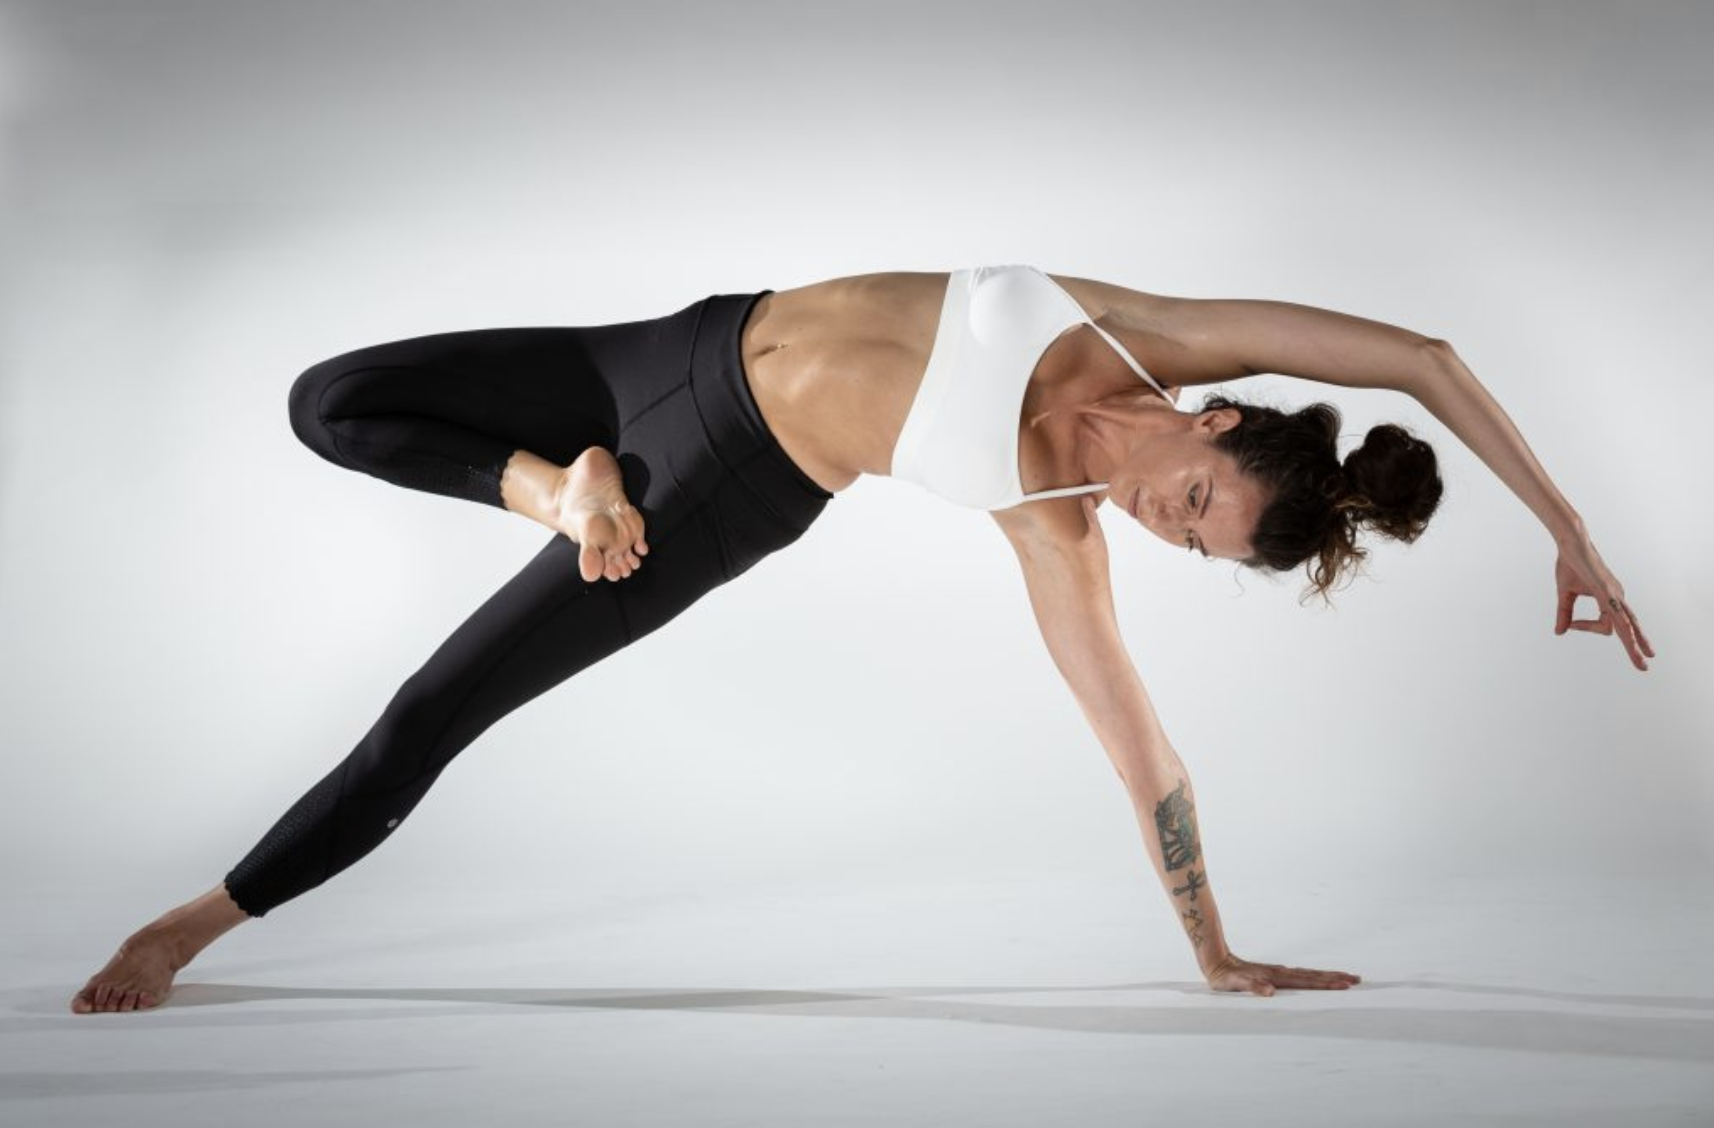 STRETCH POSITIONS | Basic yoga poses, Beginner cardio workout, Yoga poses